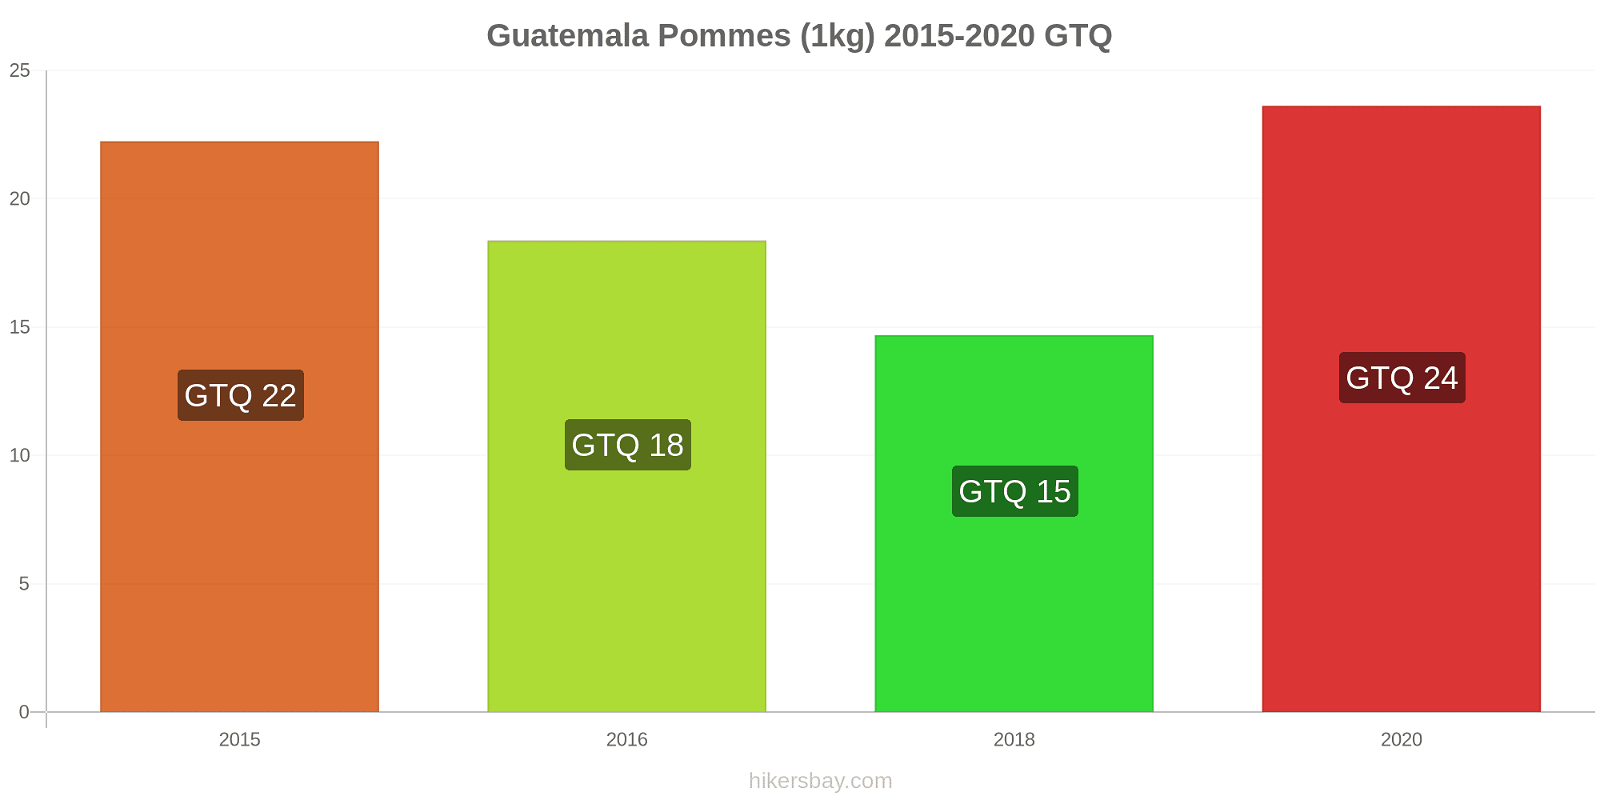 Guatemala changements de prix Pommes (1kg) hikersbay.com